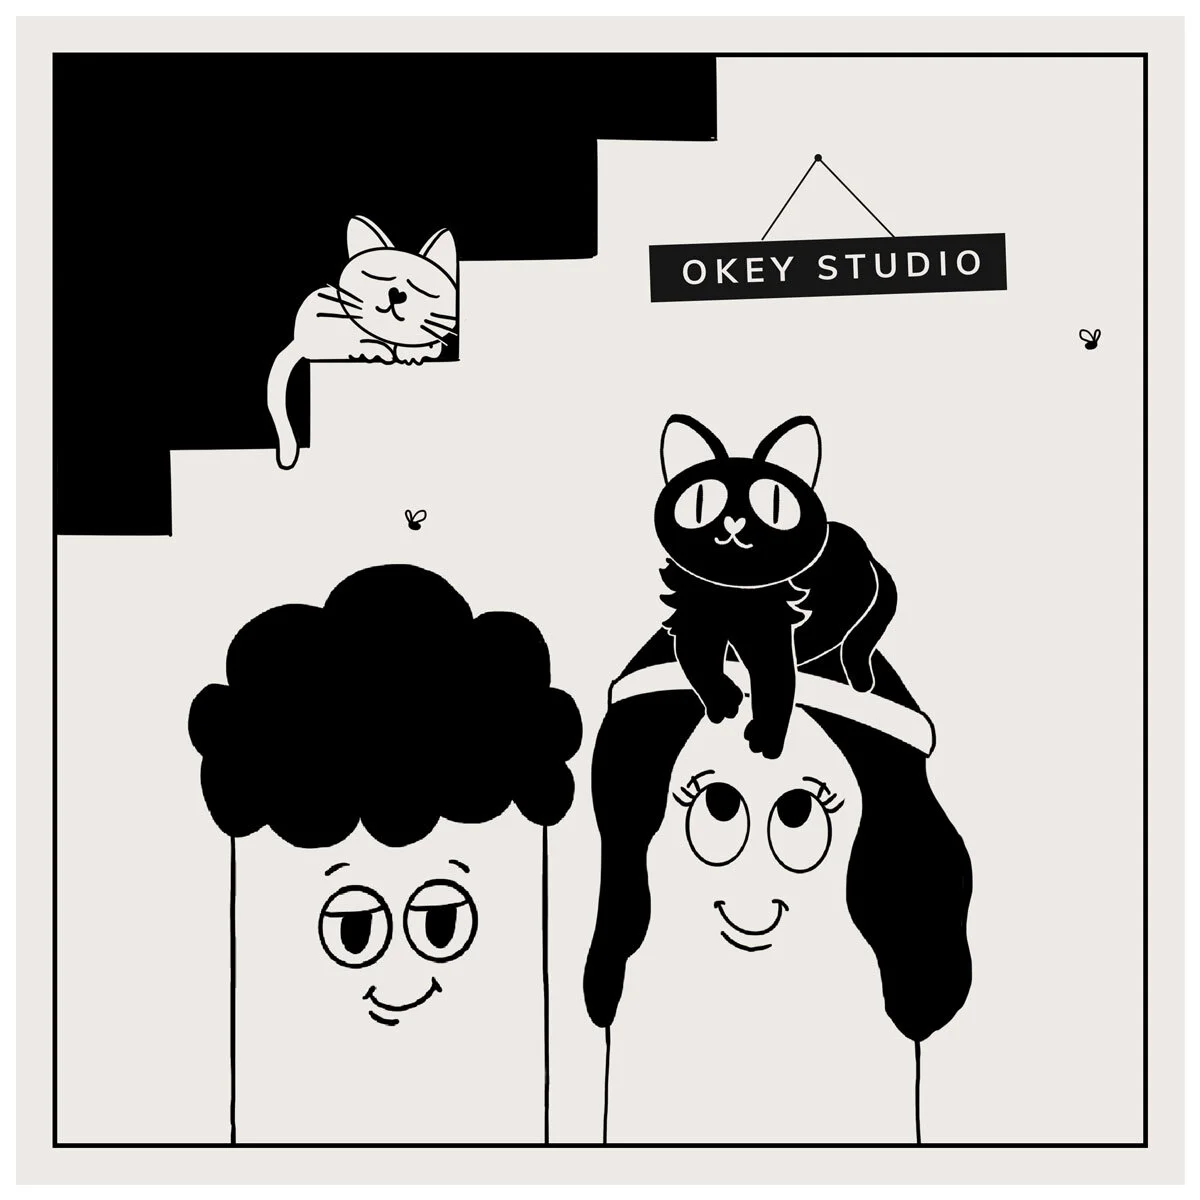 Comic strip featuring the Okey Studio